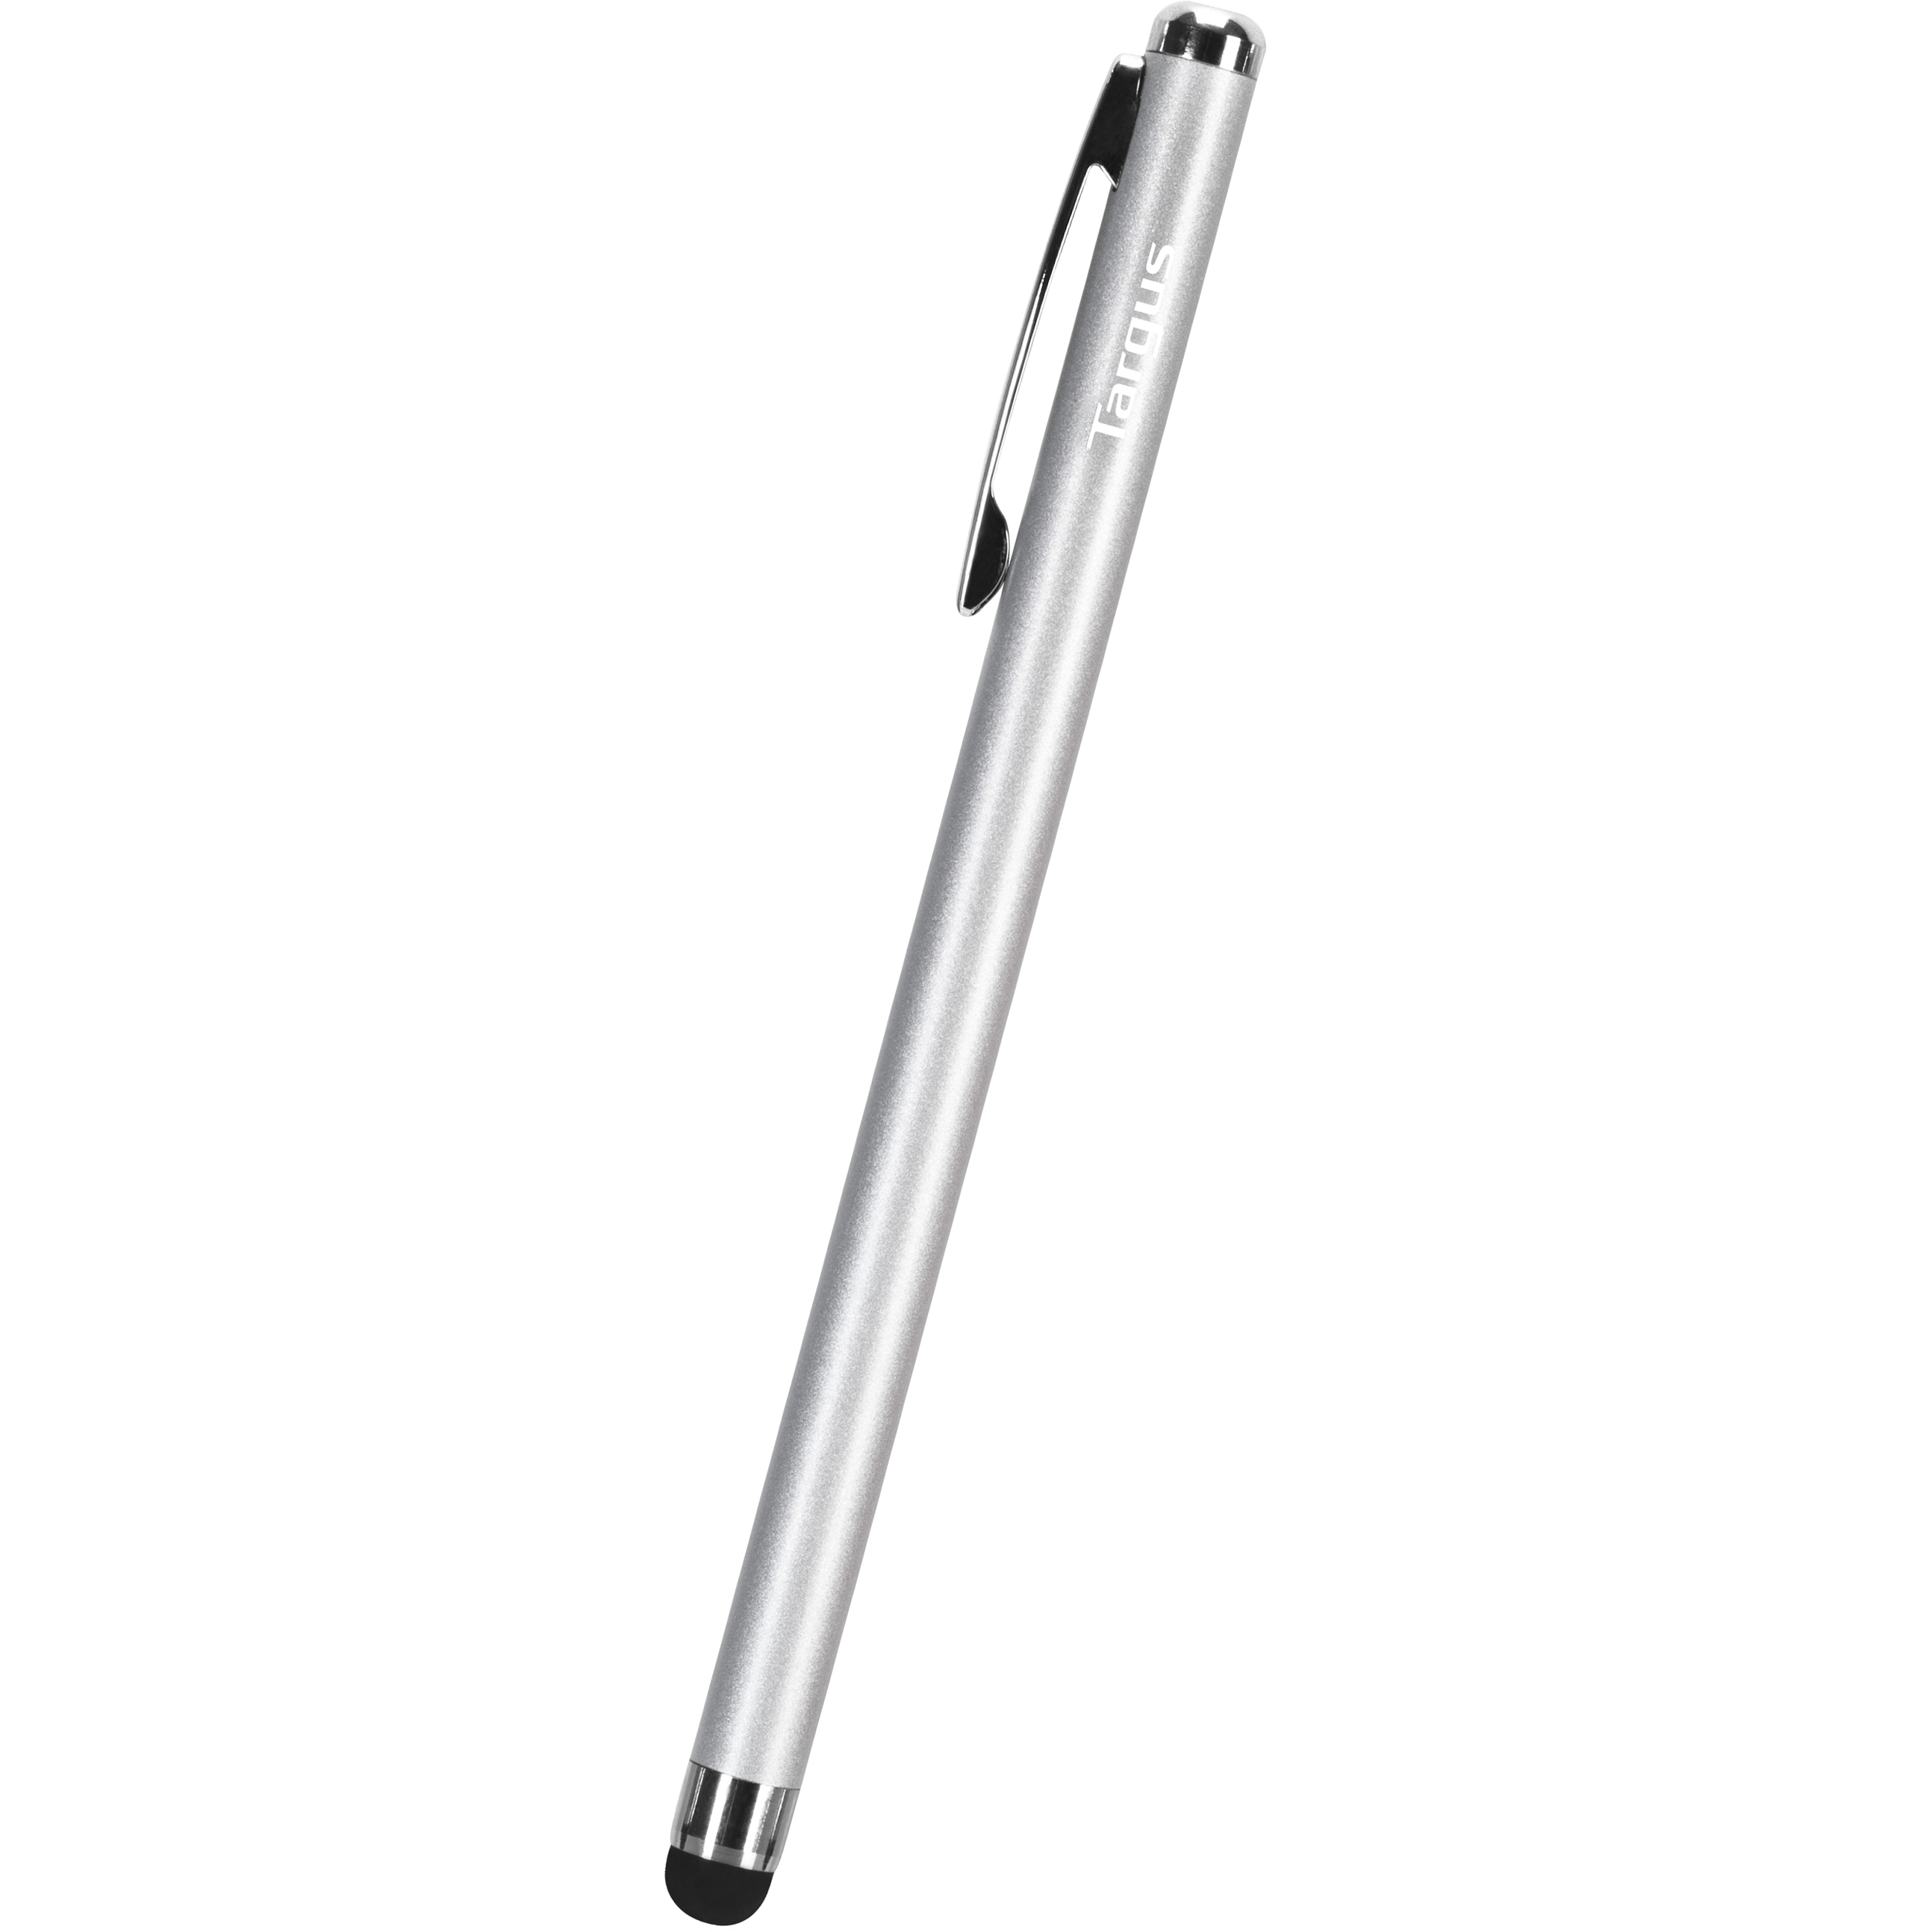 Targus AMM1205US stylus pen